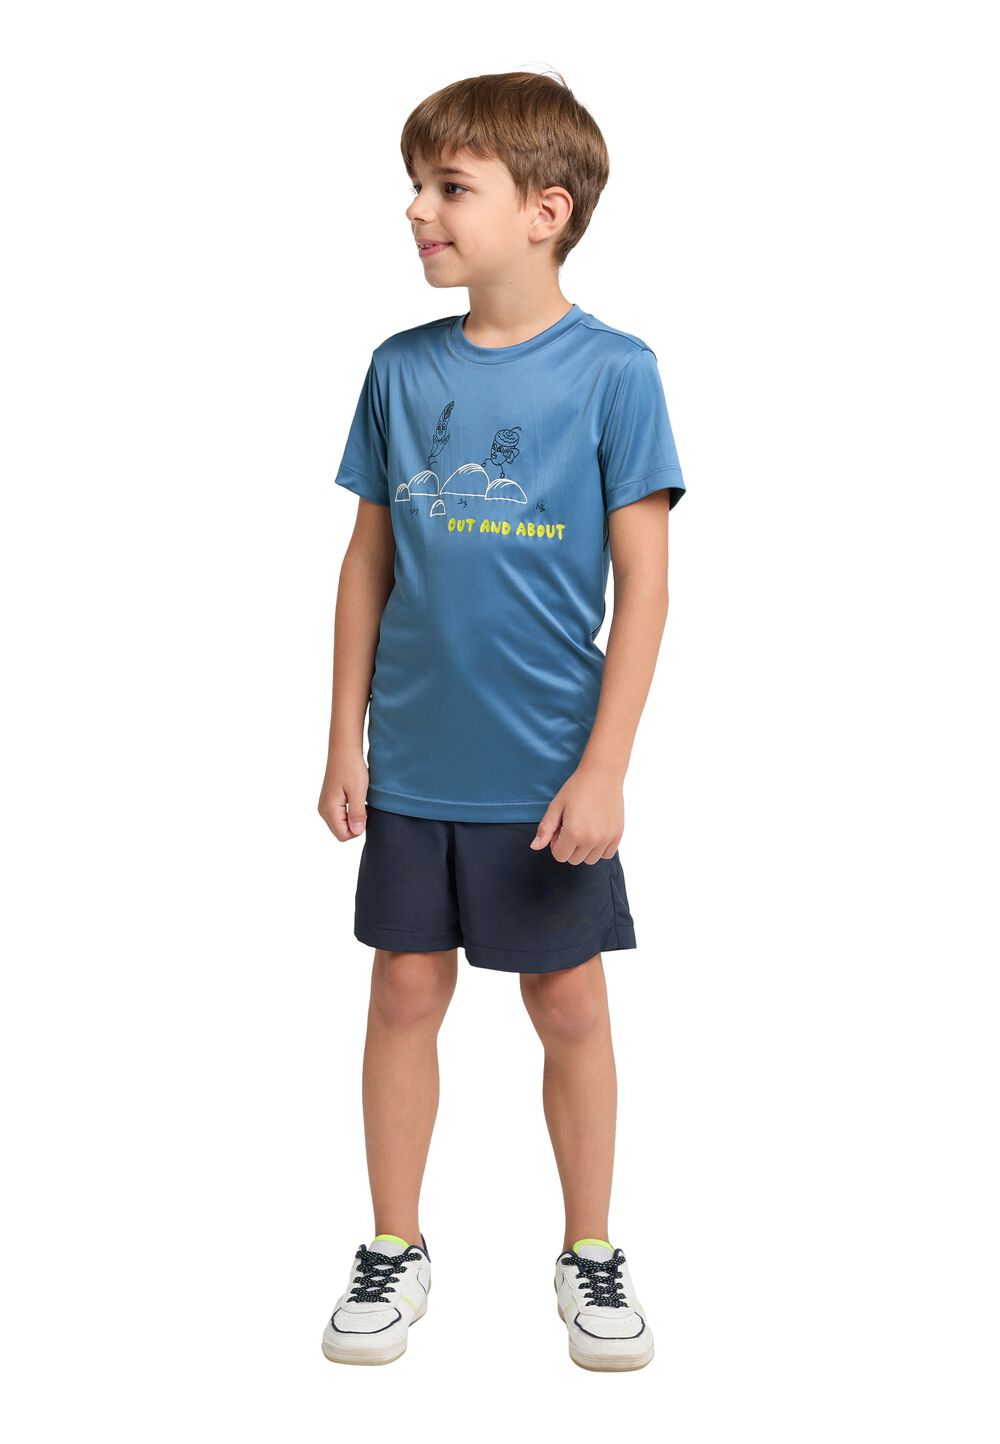 Jack Wolfskin OUT AND About T-Shirt Kids Functioneel shirt Kinderen 128 elemental blue elemental blue